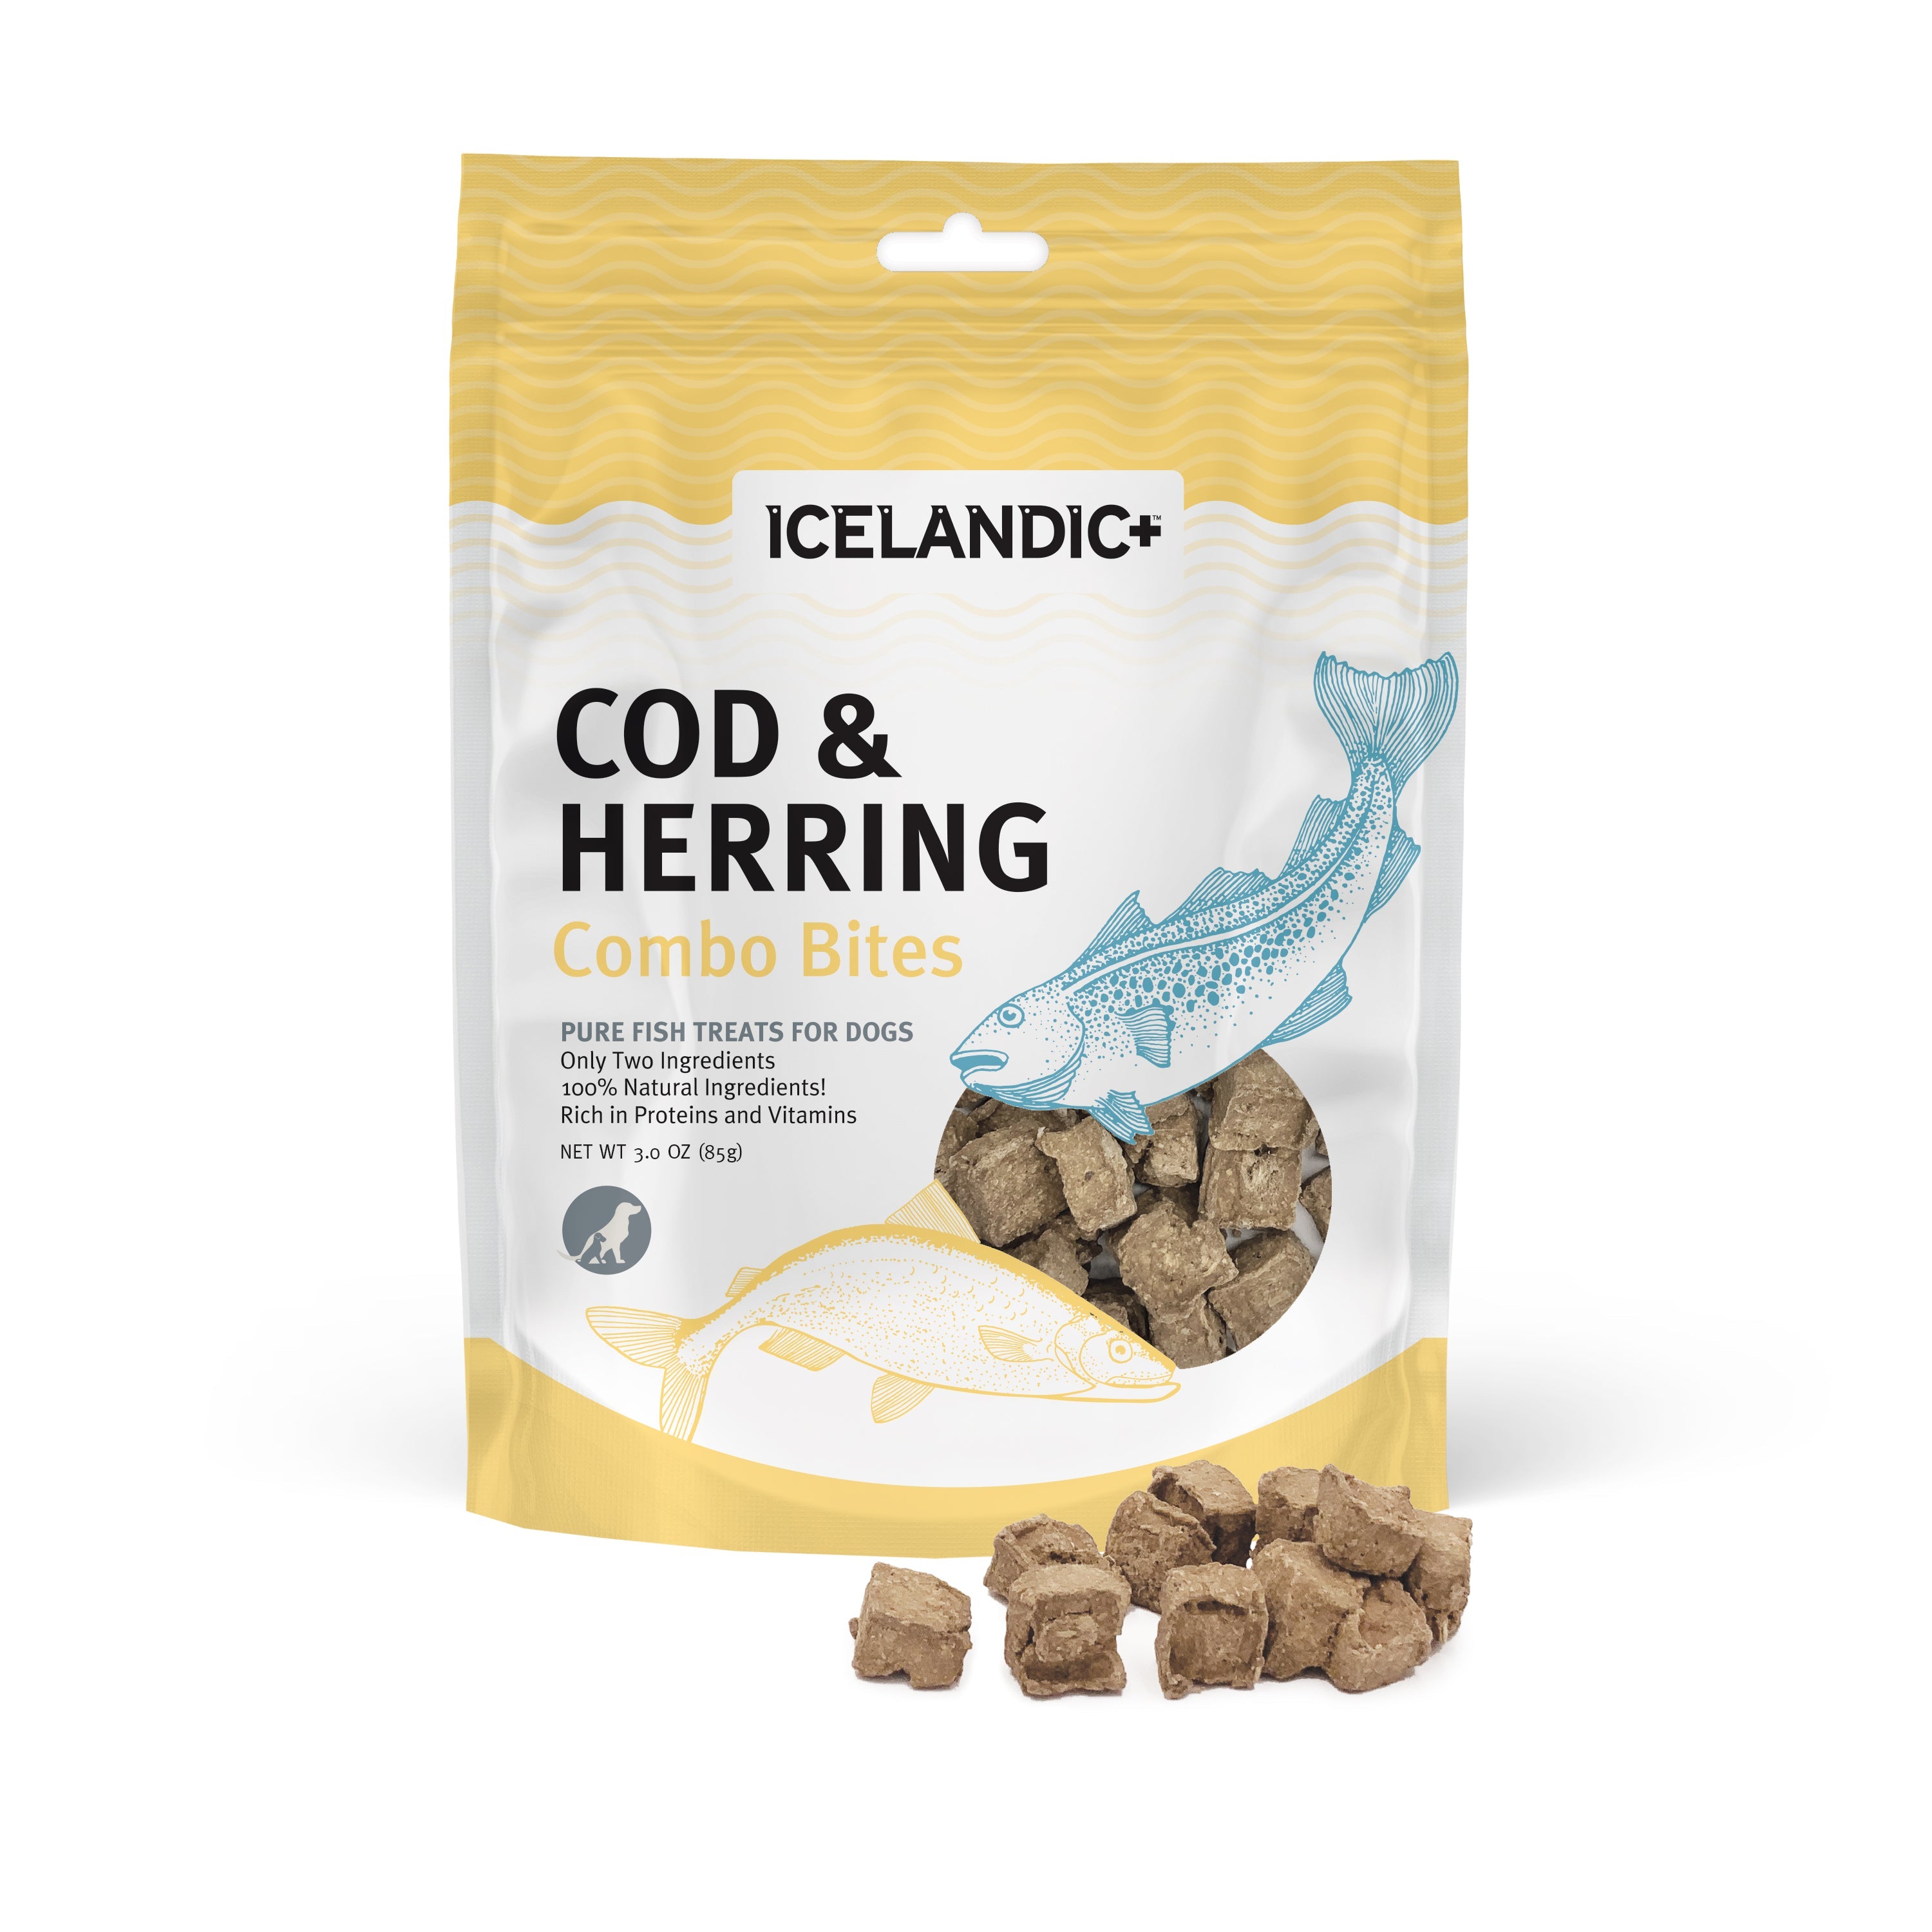 Icelandic+ Combo Bites Cod & Herring Soft Dog Treats, 2.5oz